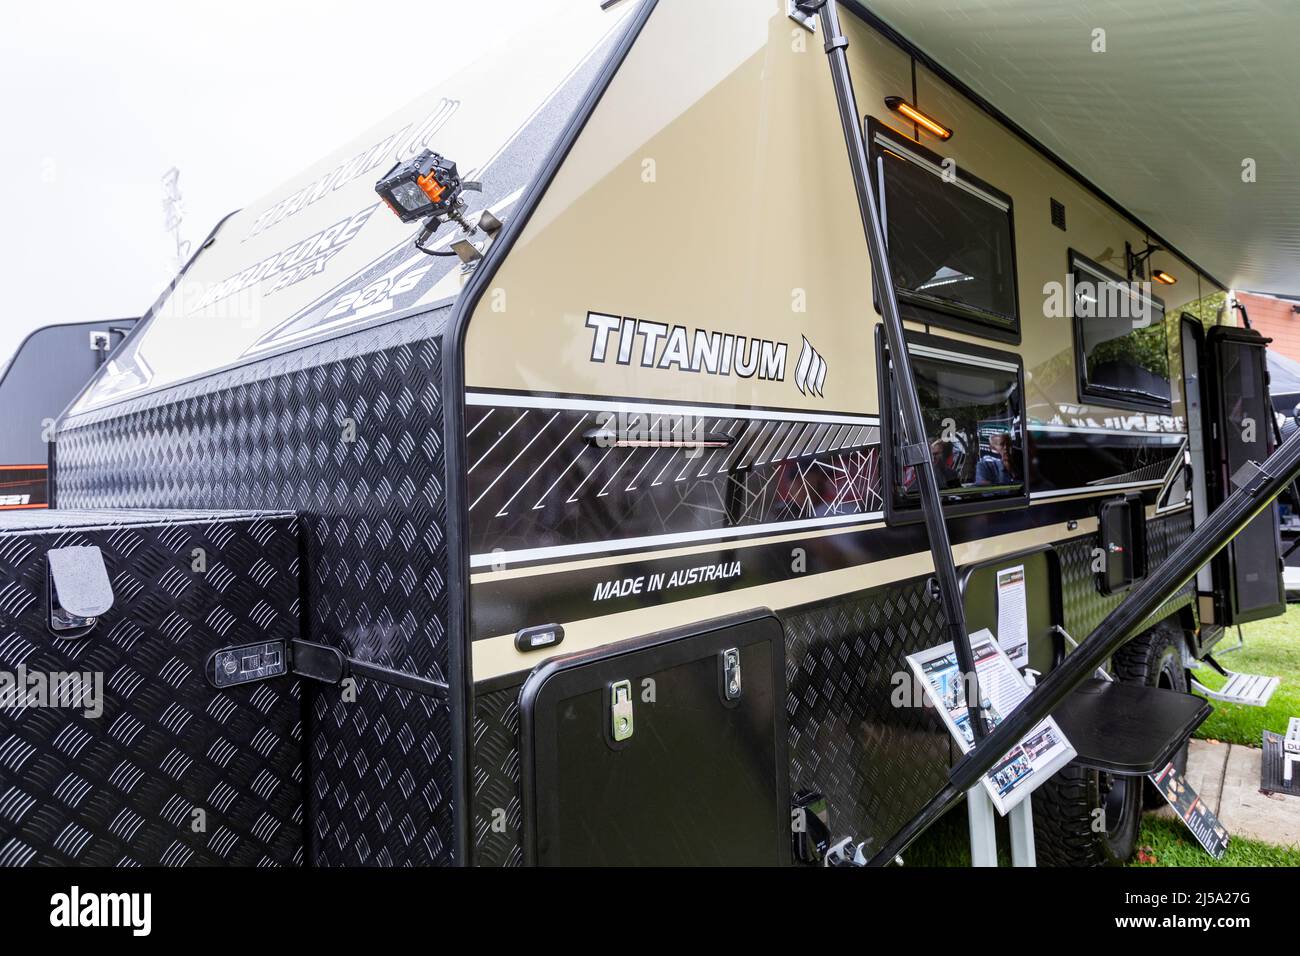 Titanium camper trailer caravan on display at the Sydney caravan and camping show,Australia Stock Photo